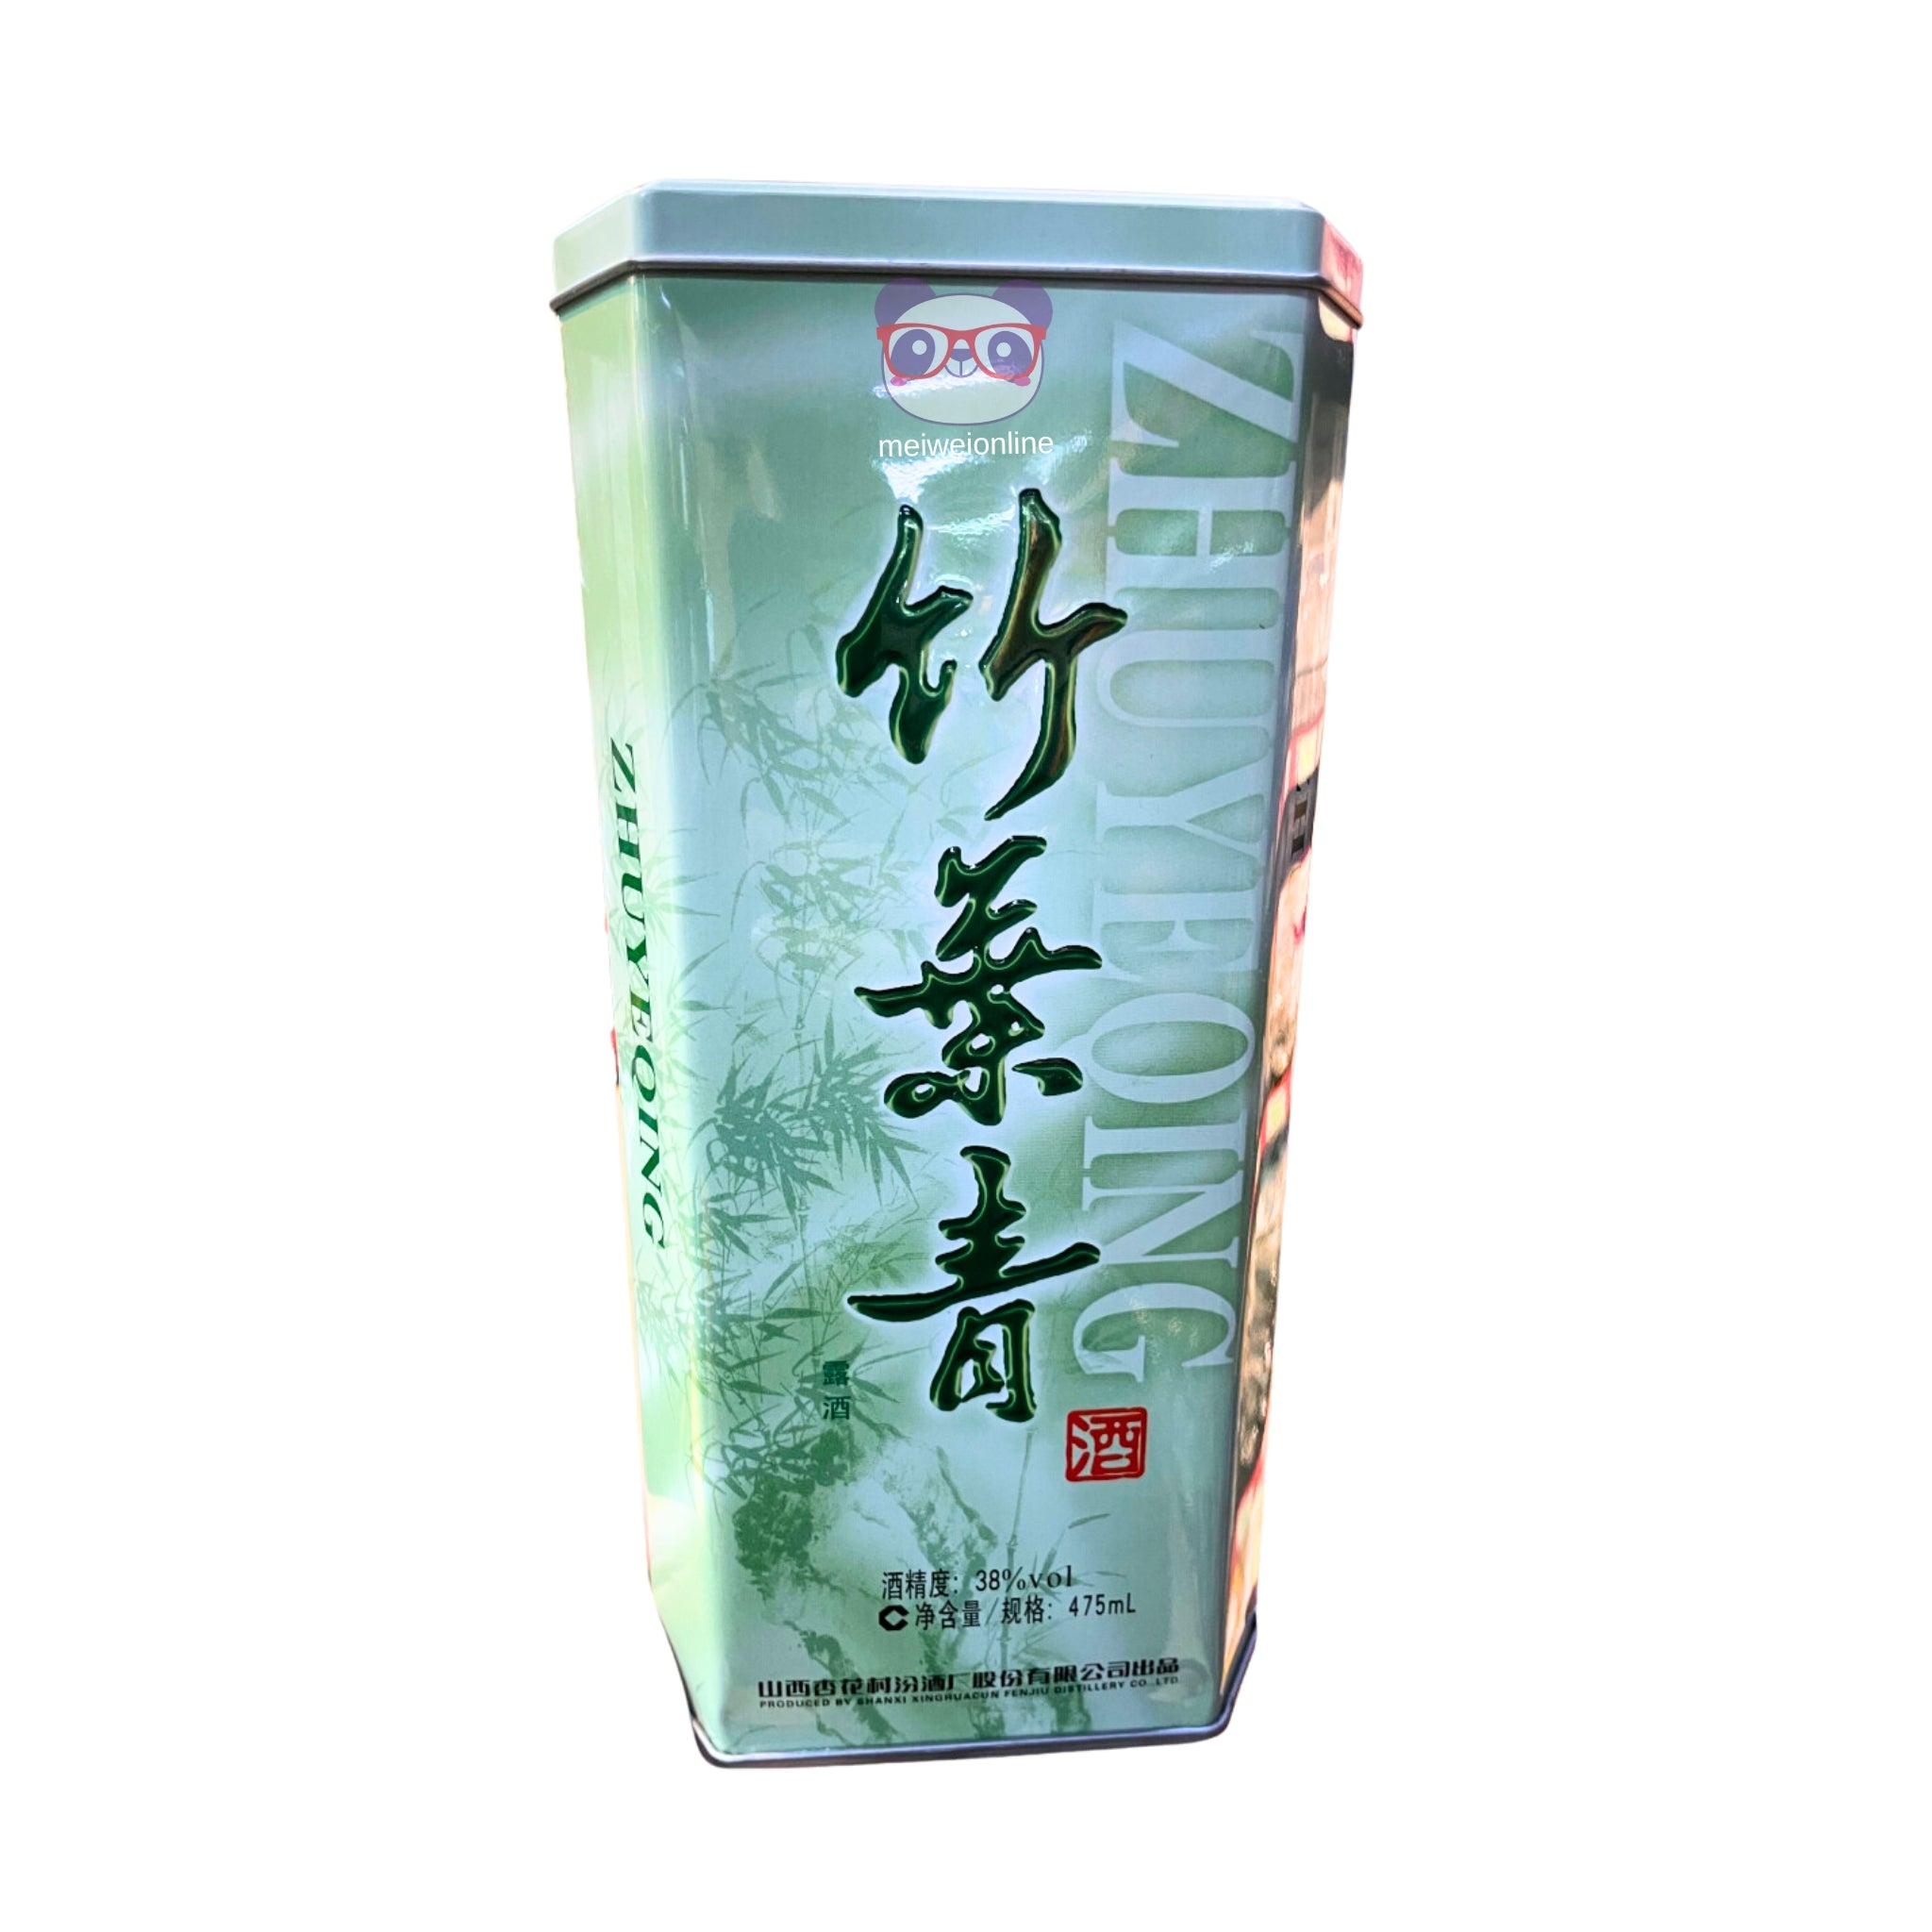 Vinho verde folhas de bambu 38% Zhuyeqing 475ml